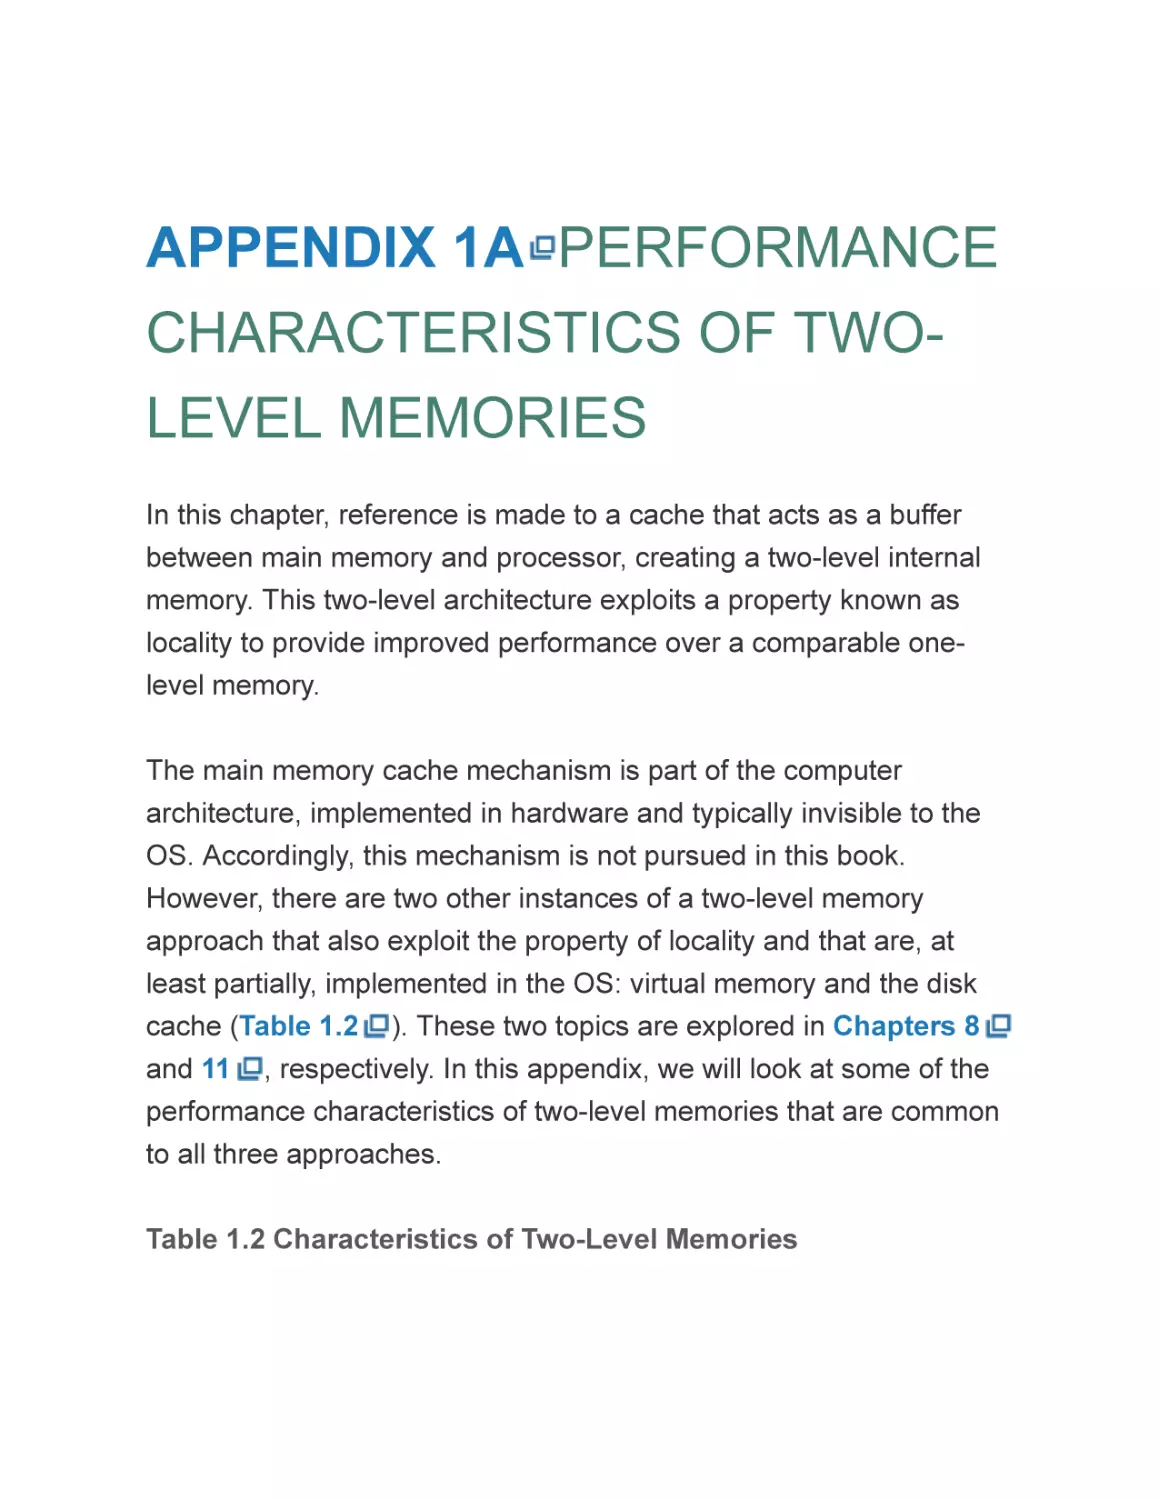 APPENDIX 1APERFORMANCE CHARACTERISTICS OF TWO-LEVEL MEMORIES